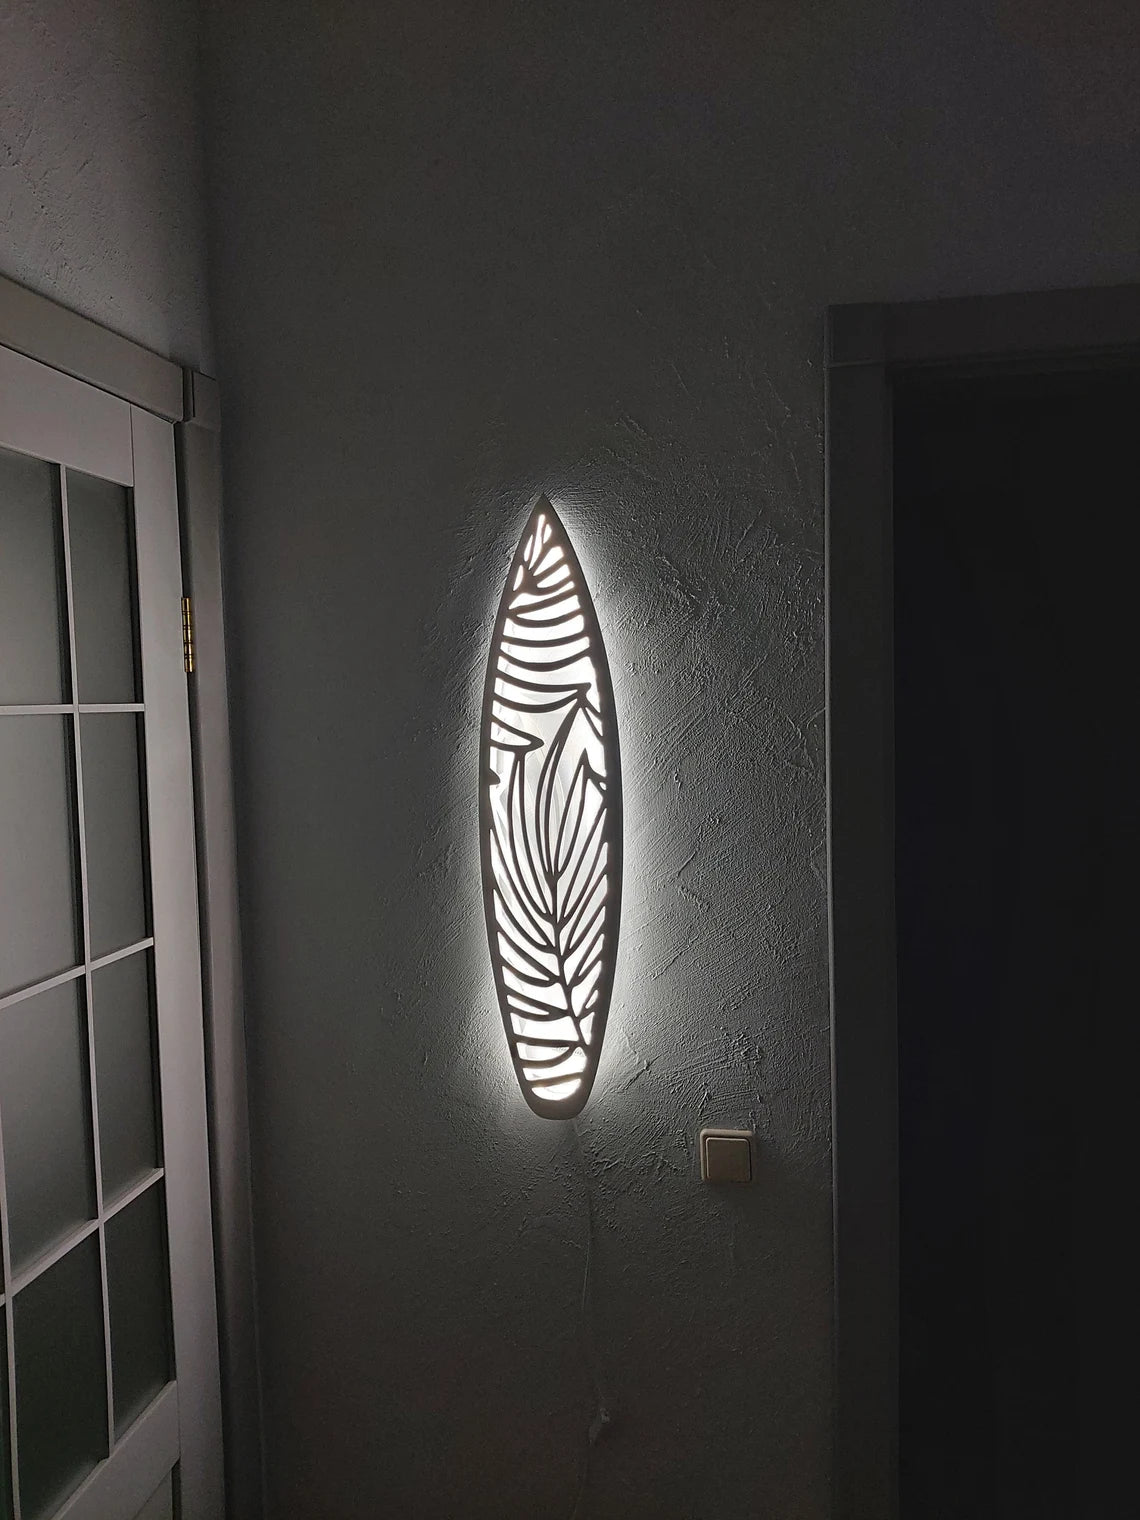 Beach Lamp - Surfboard Lamp, Nightlight for Wall Decor